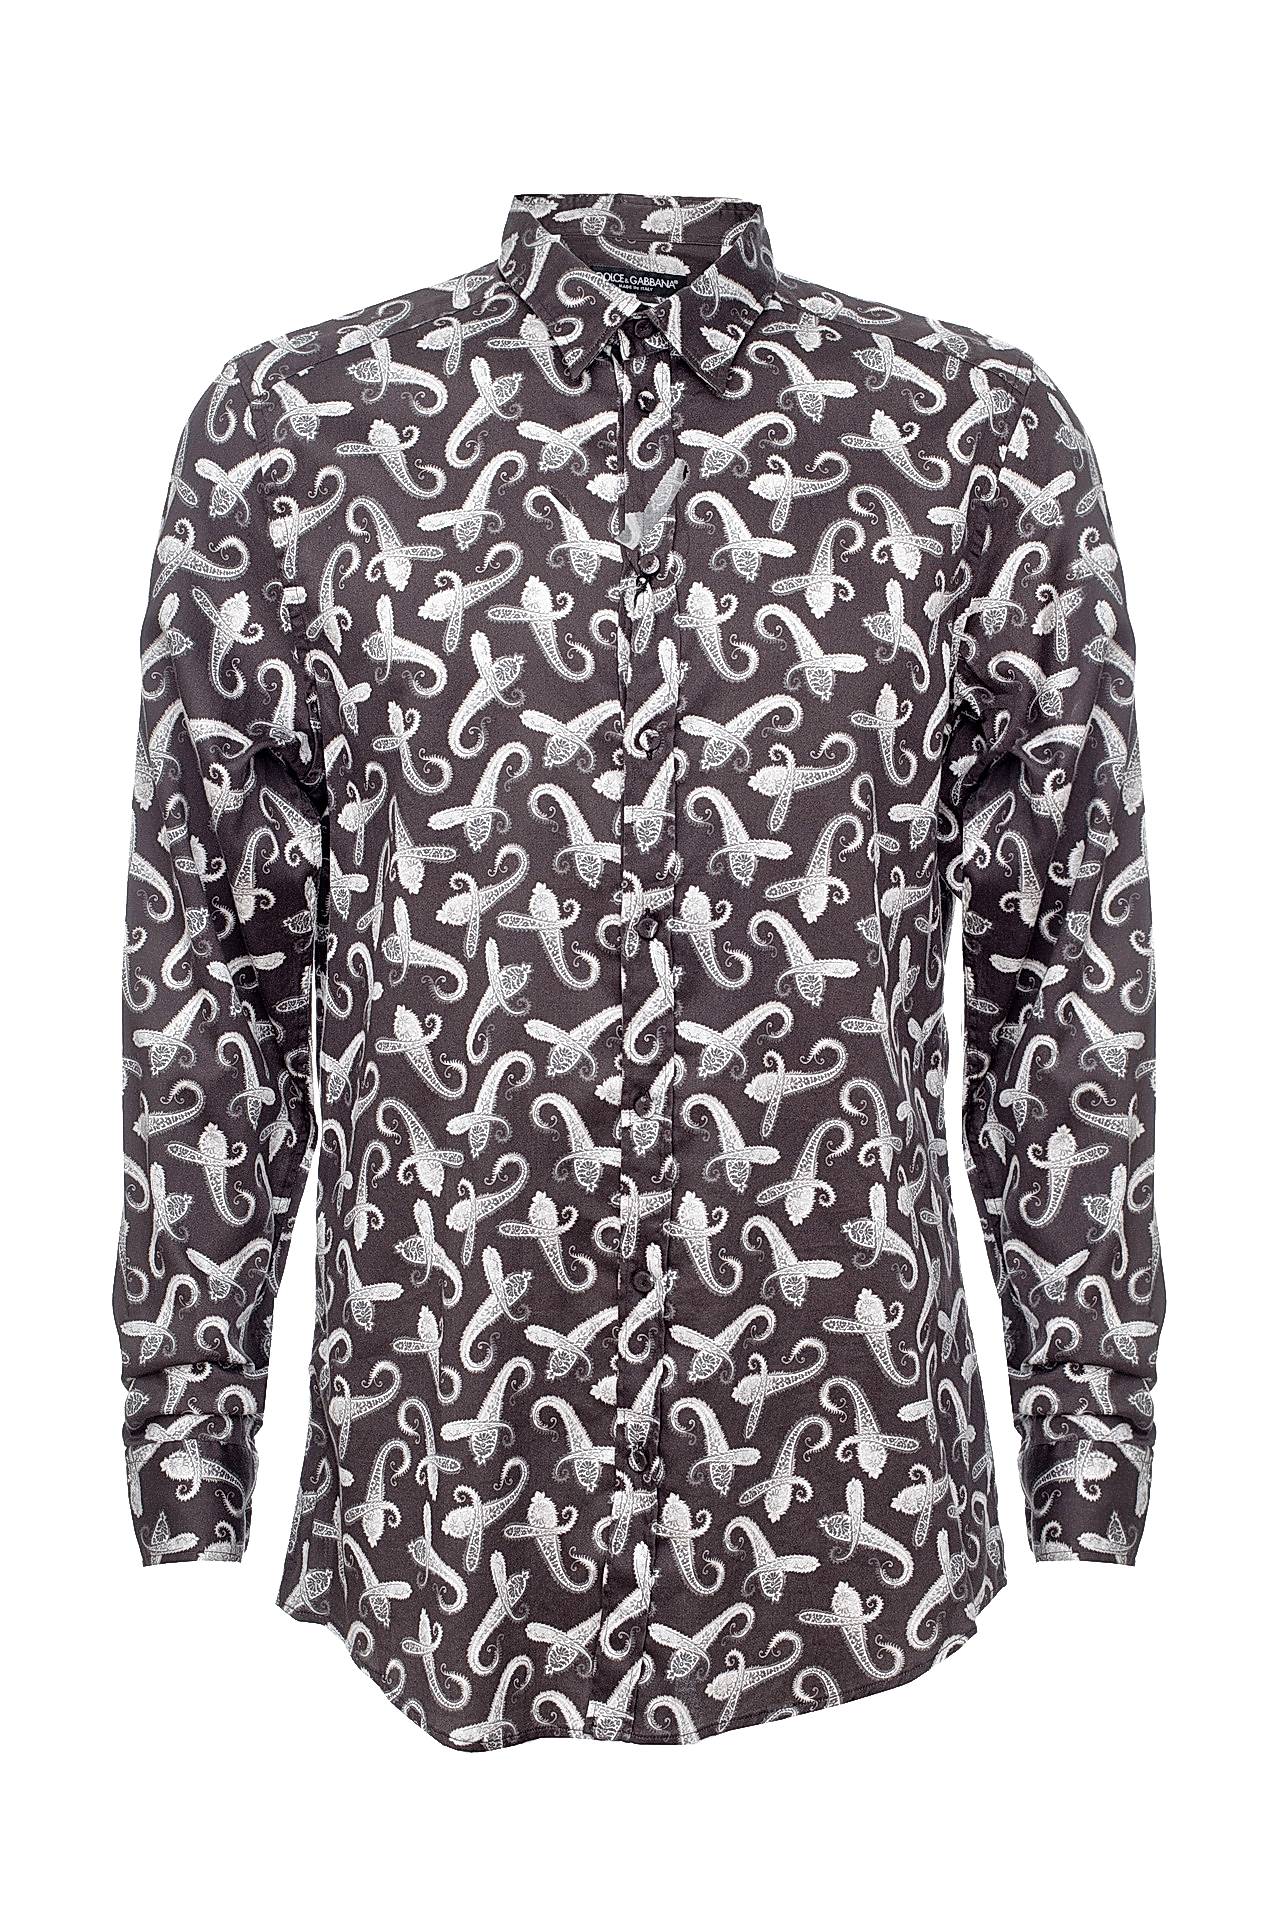 Одежда мужская Рубашка DOLCE & GABBANA (G5AV0TFS5KJ/16.1). Купить за 14950 руб.